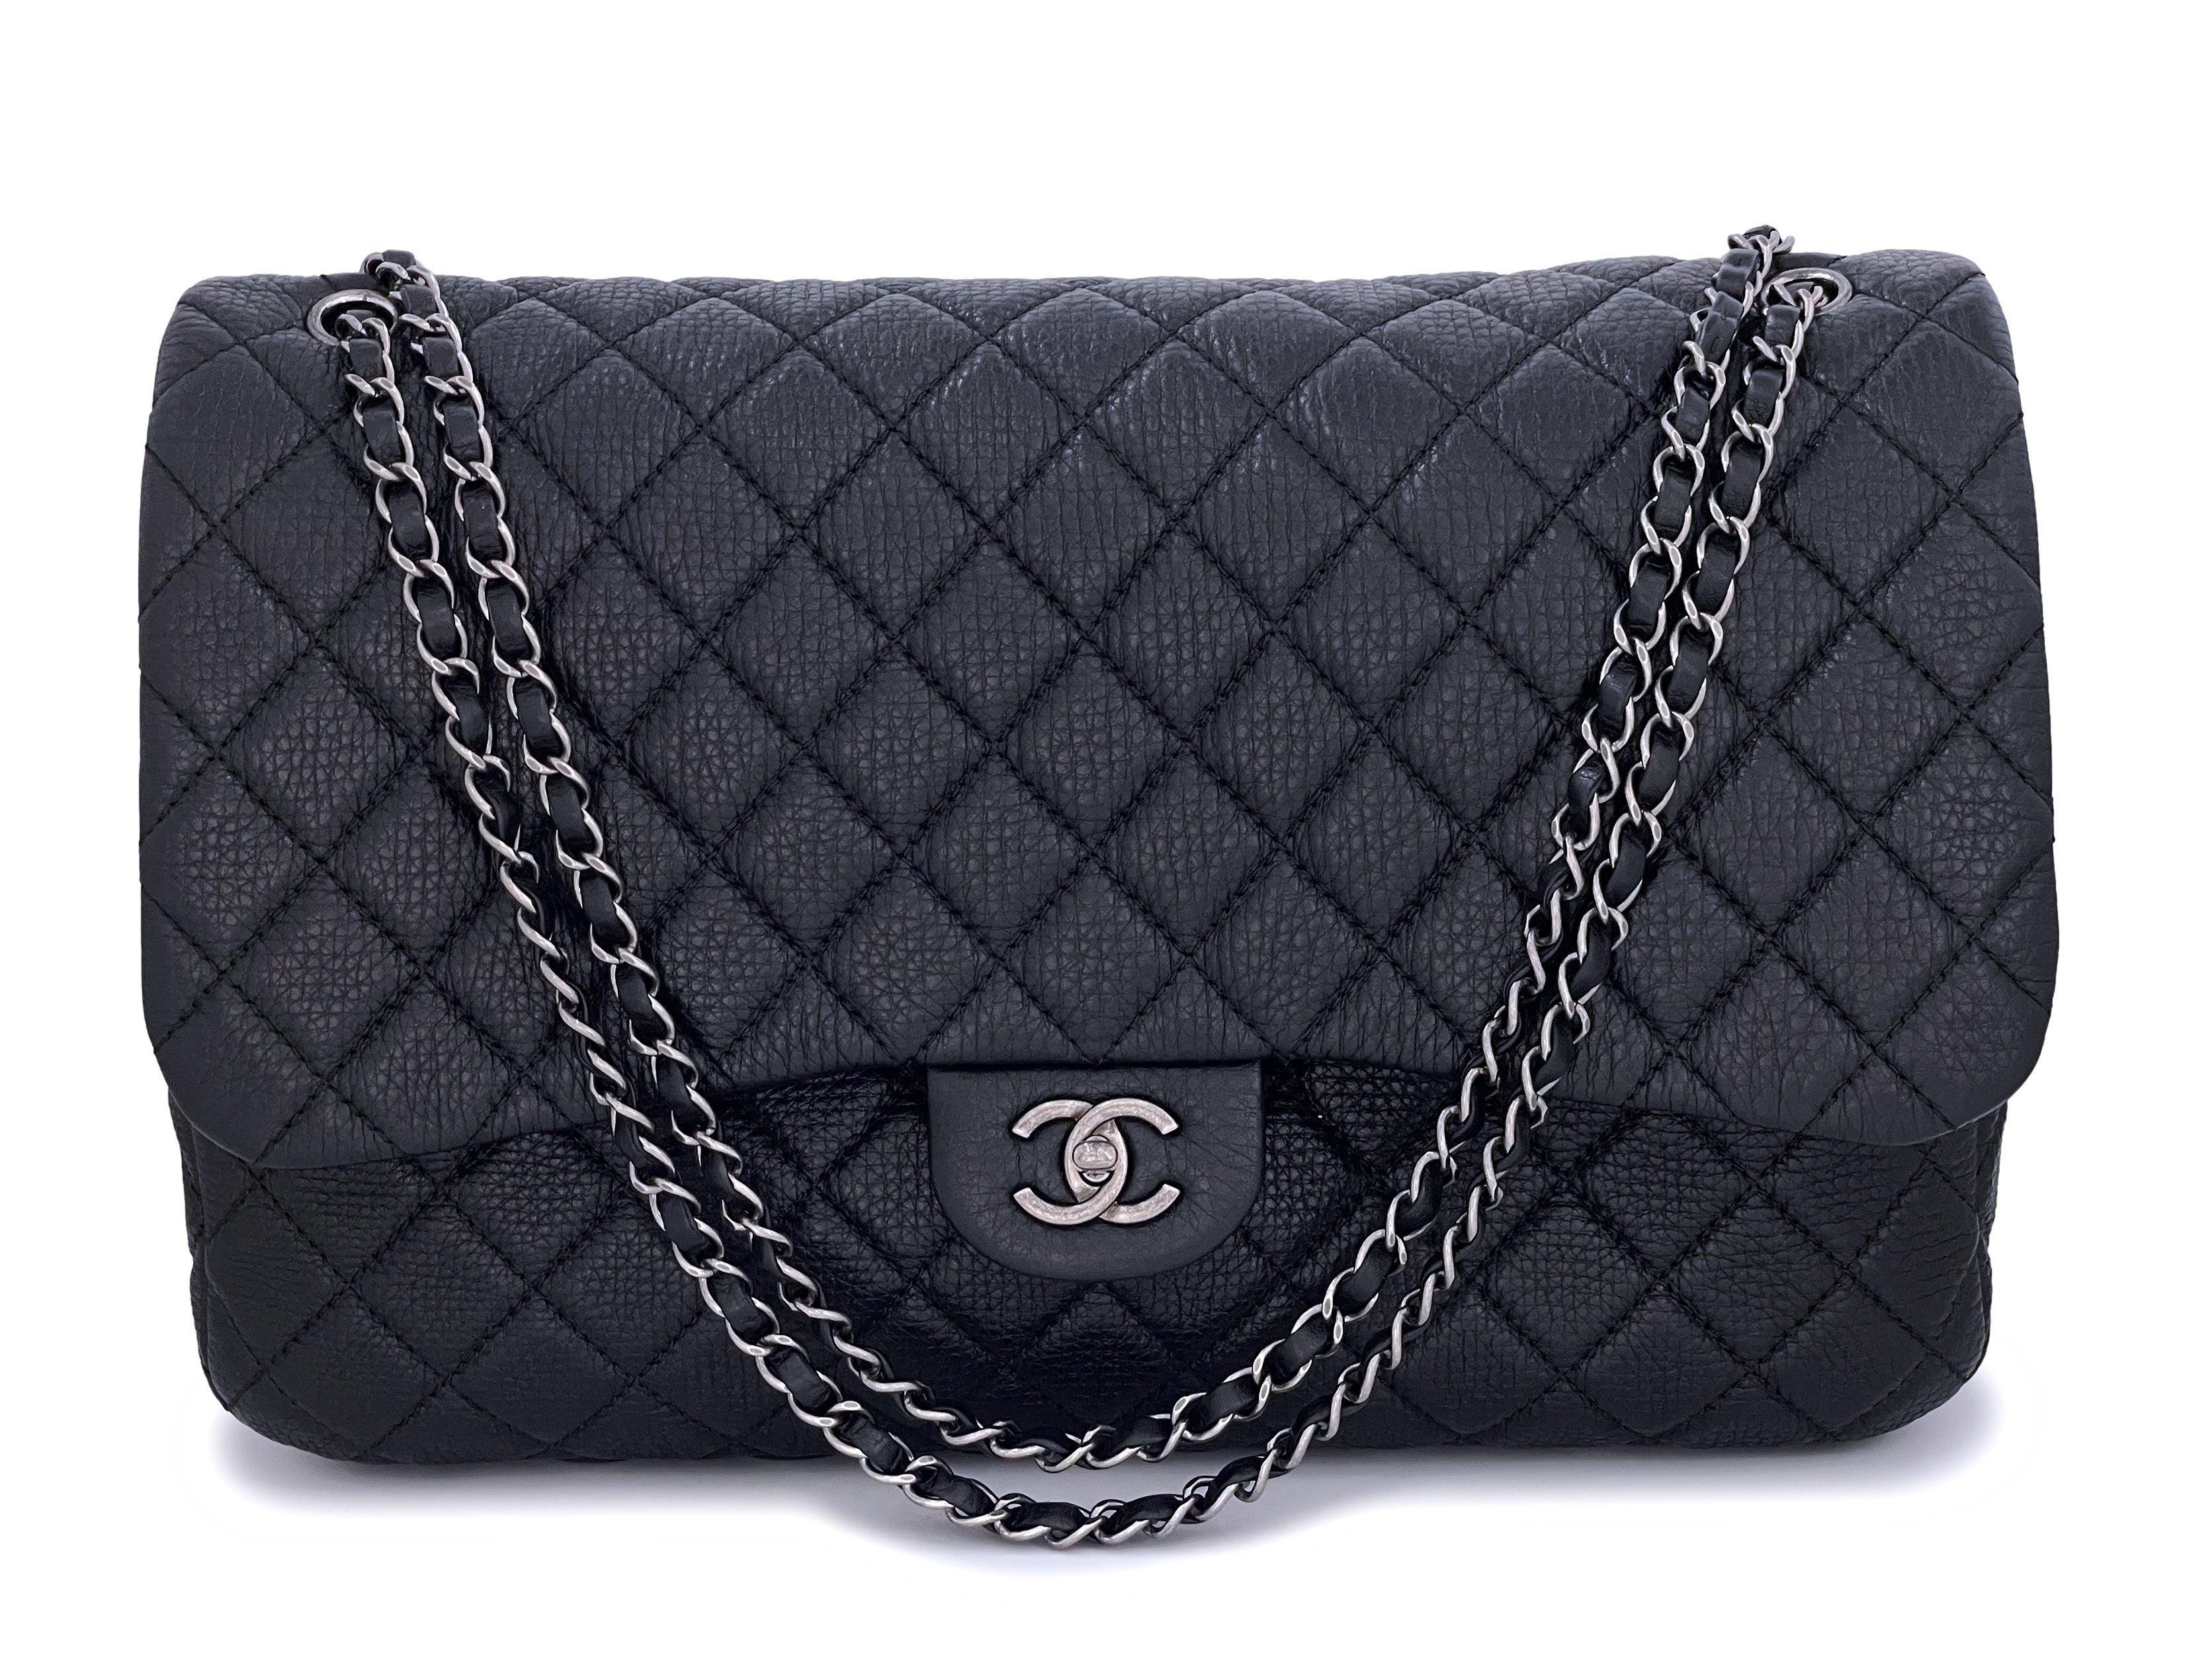 AUTHENTIC Chanel XXL Airline Travel Bag  Black handbags, Shooping bag,  Vintage chanel